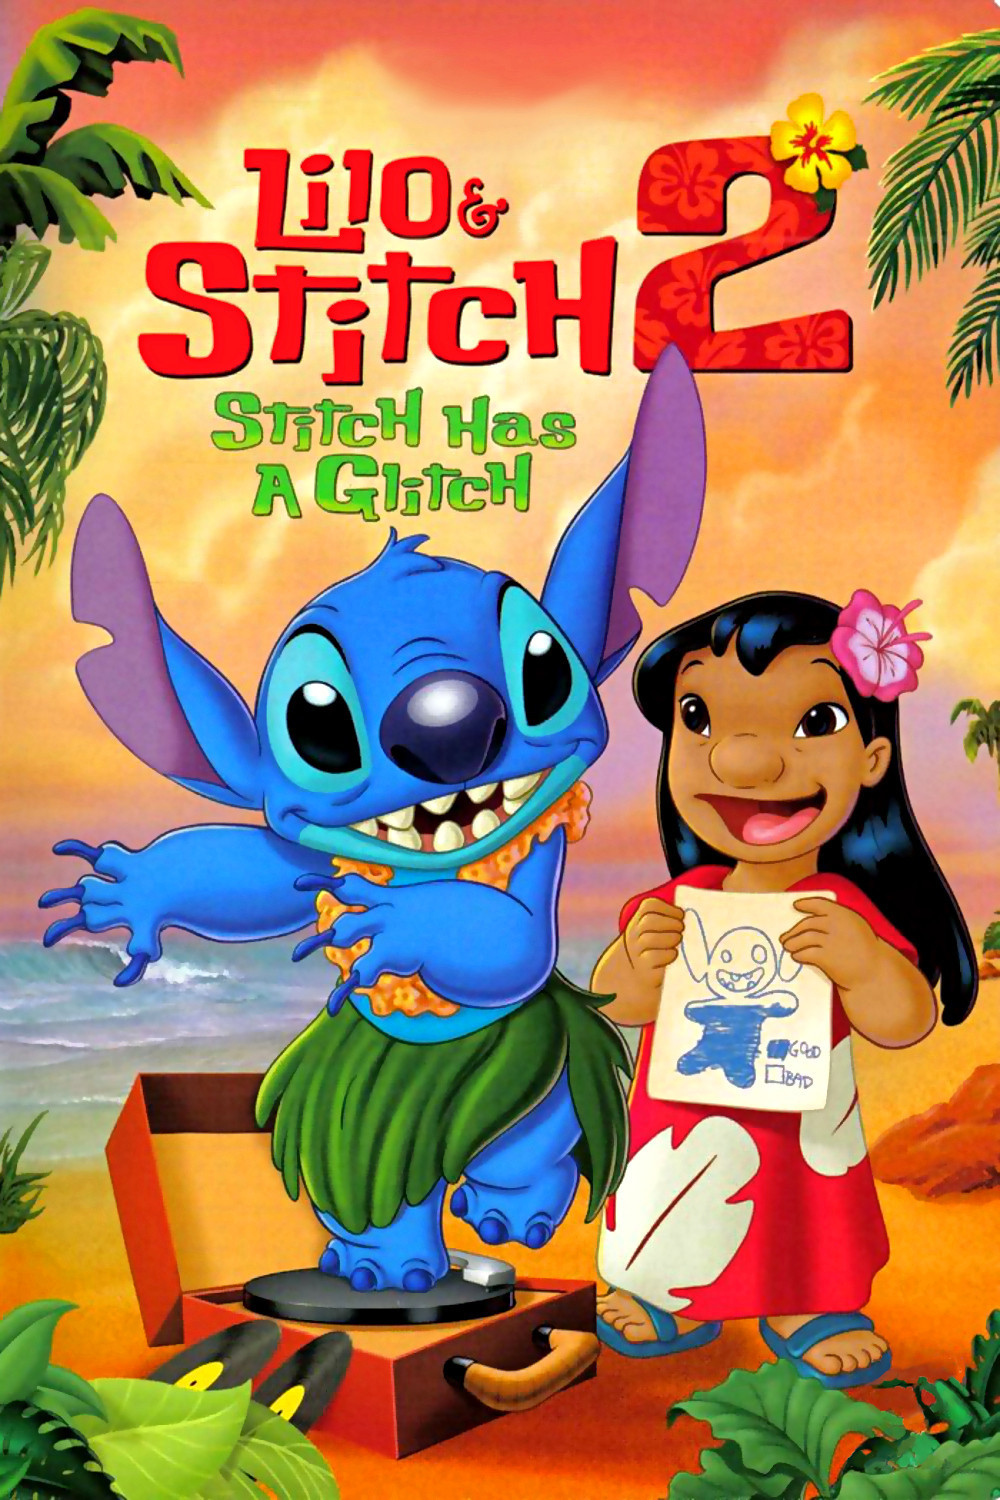 Lilo ve Stitch 2